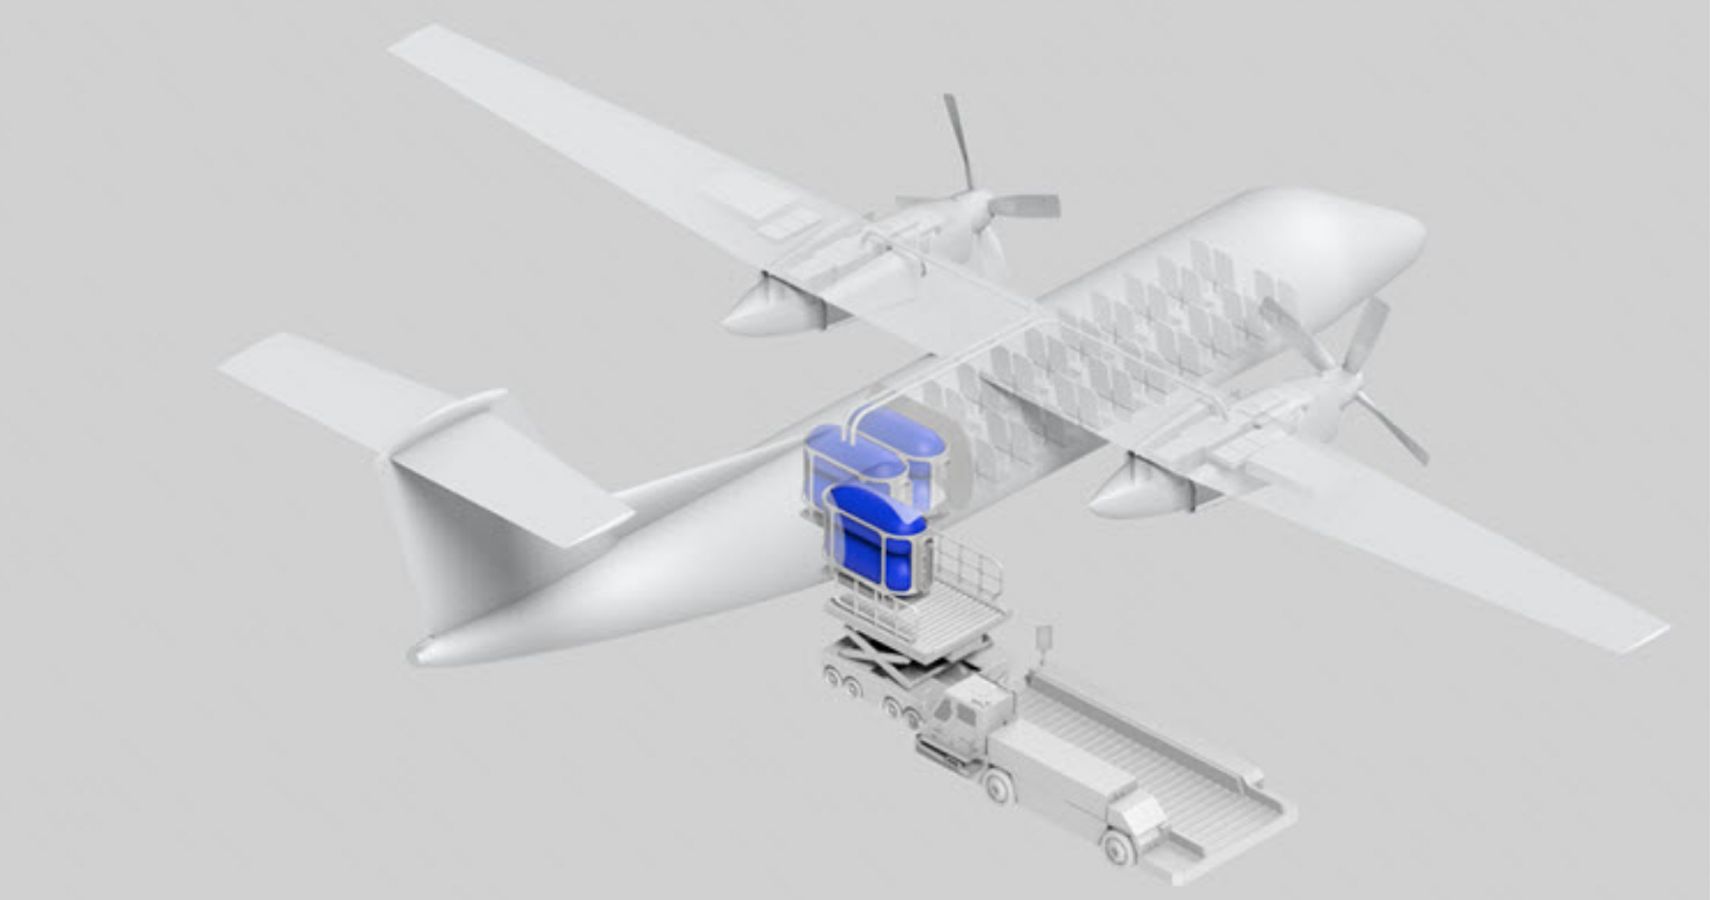 Hydrogen fuel cells loaded onto plane rendering